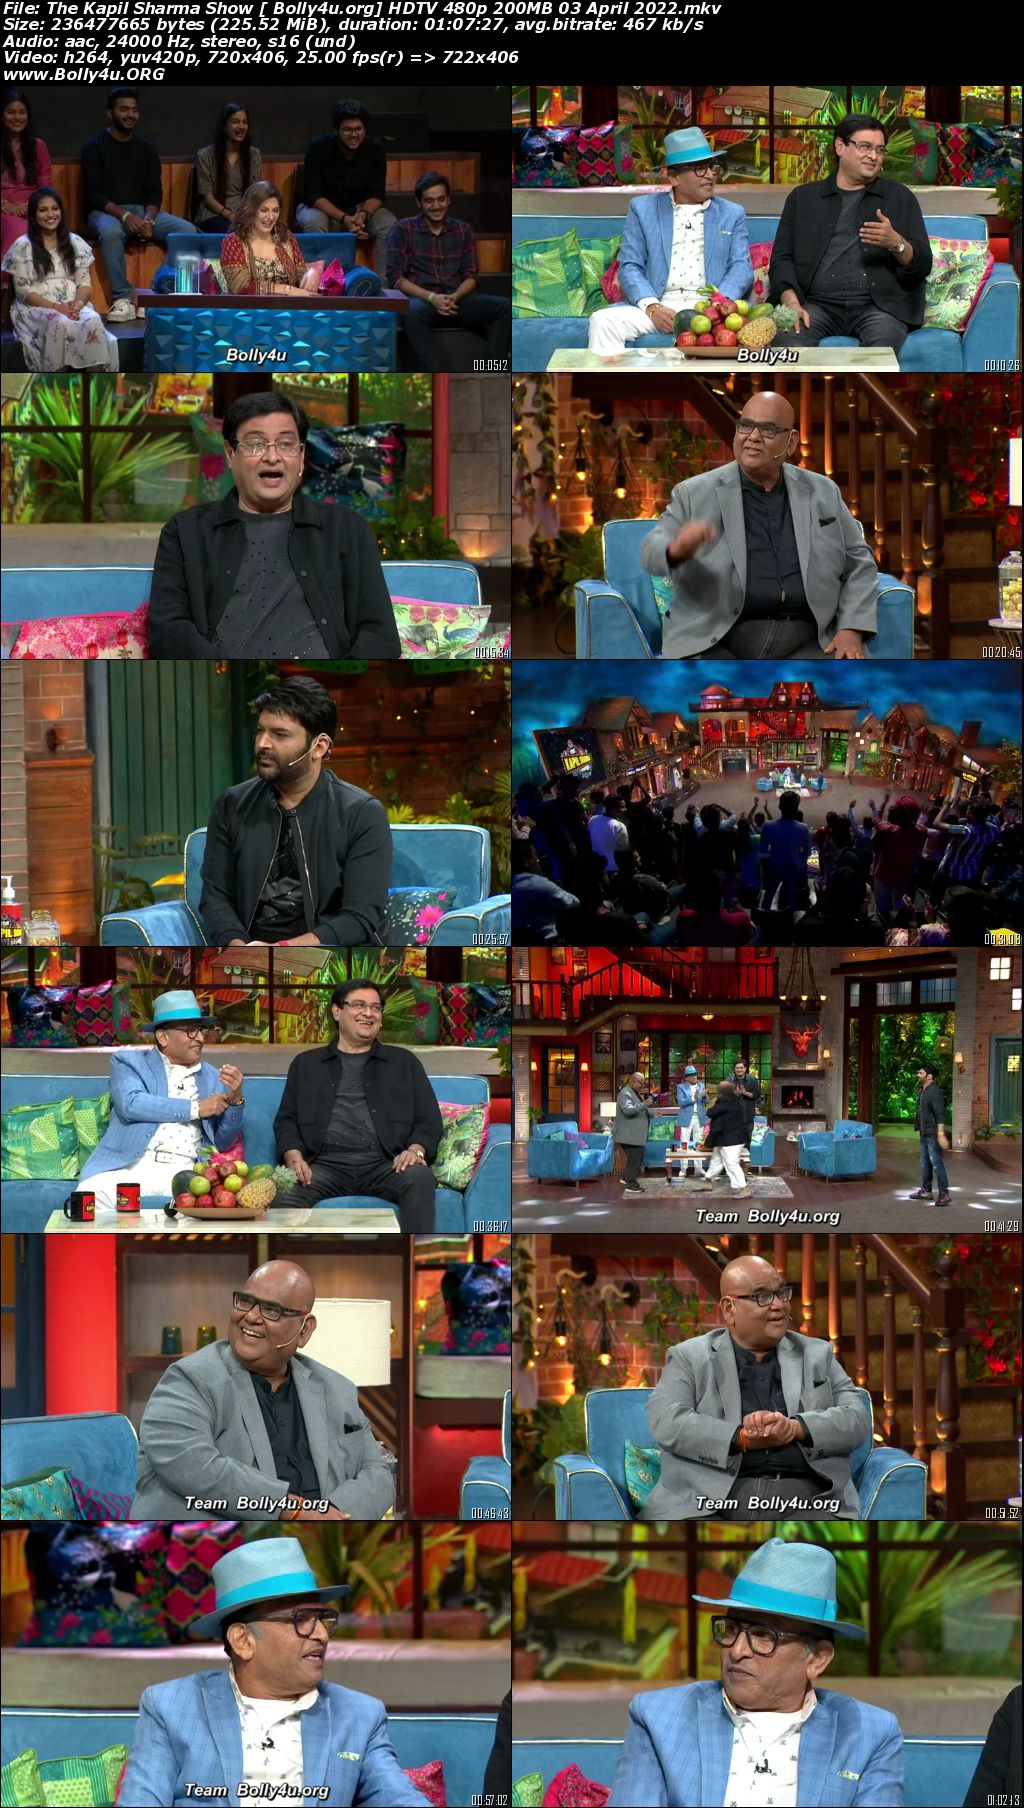 The Kapil Sharma Show HDTV 480p 200MB 03 April 2022 Download